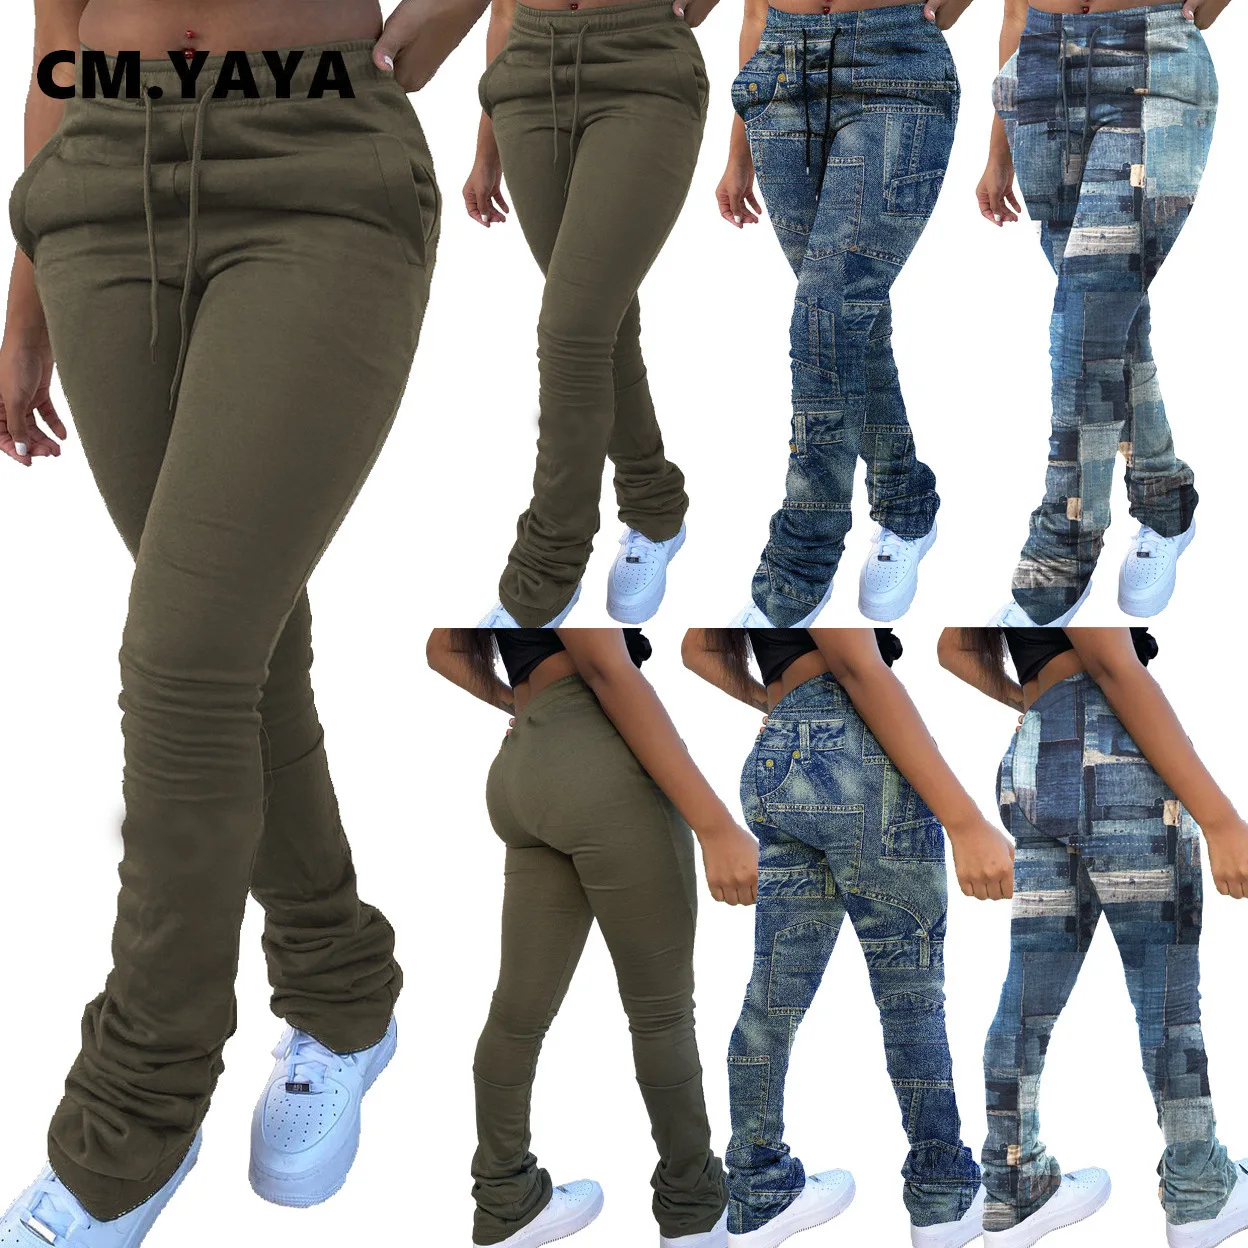 

CM.YAYA Fake Jeans Print Women Pants Legging High Waist Flare Bell Bottom Ruched Stack Trousers Draped Jogger Sweatpants